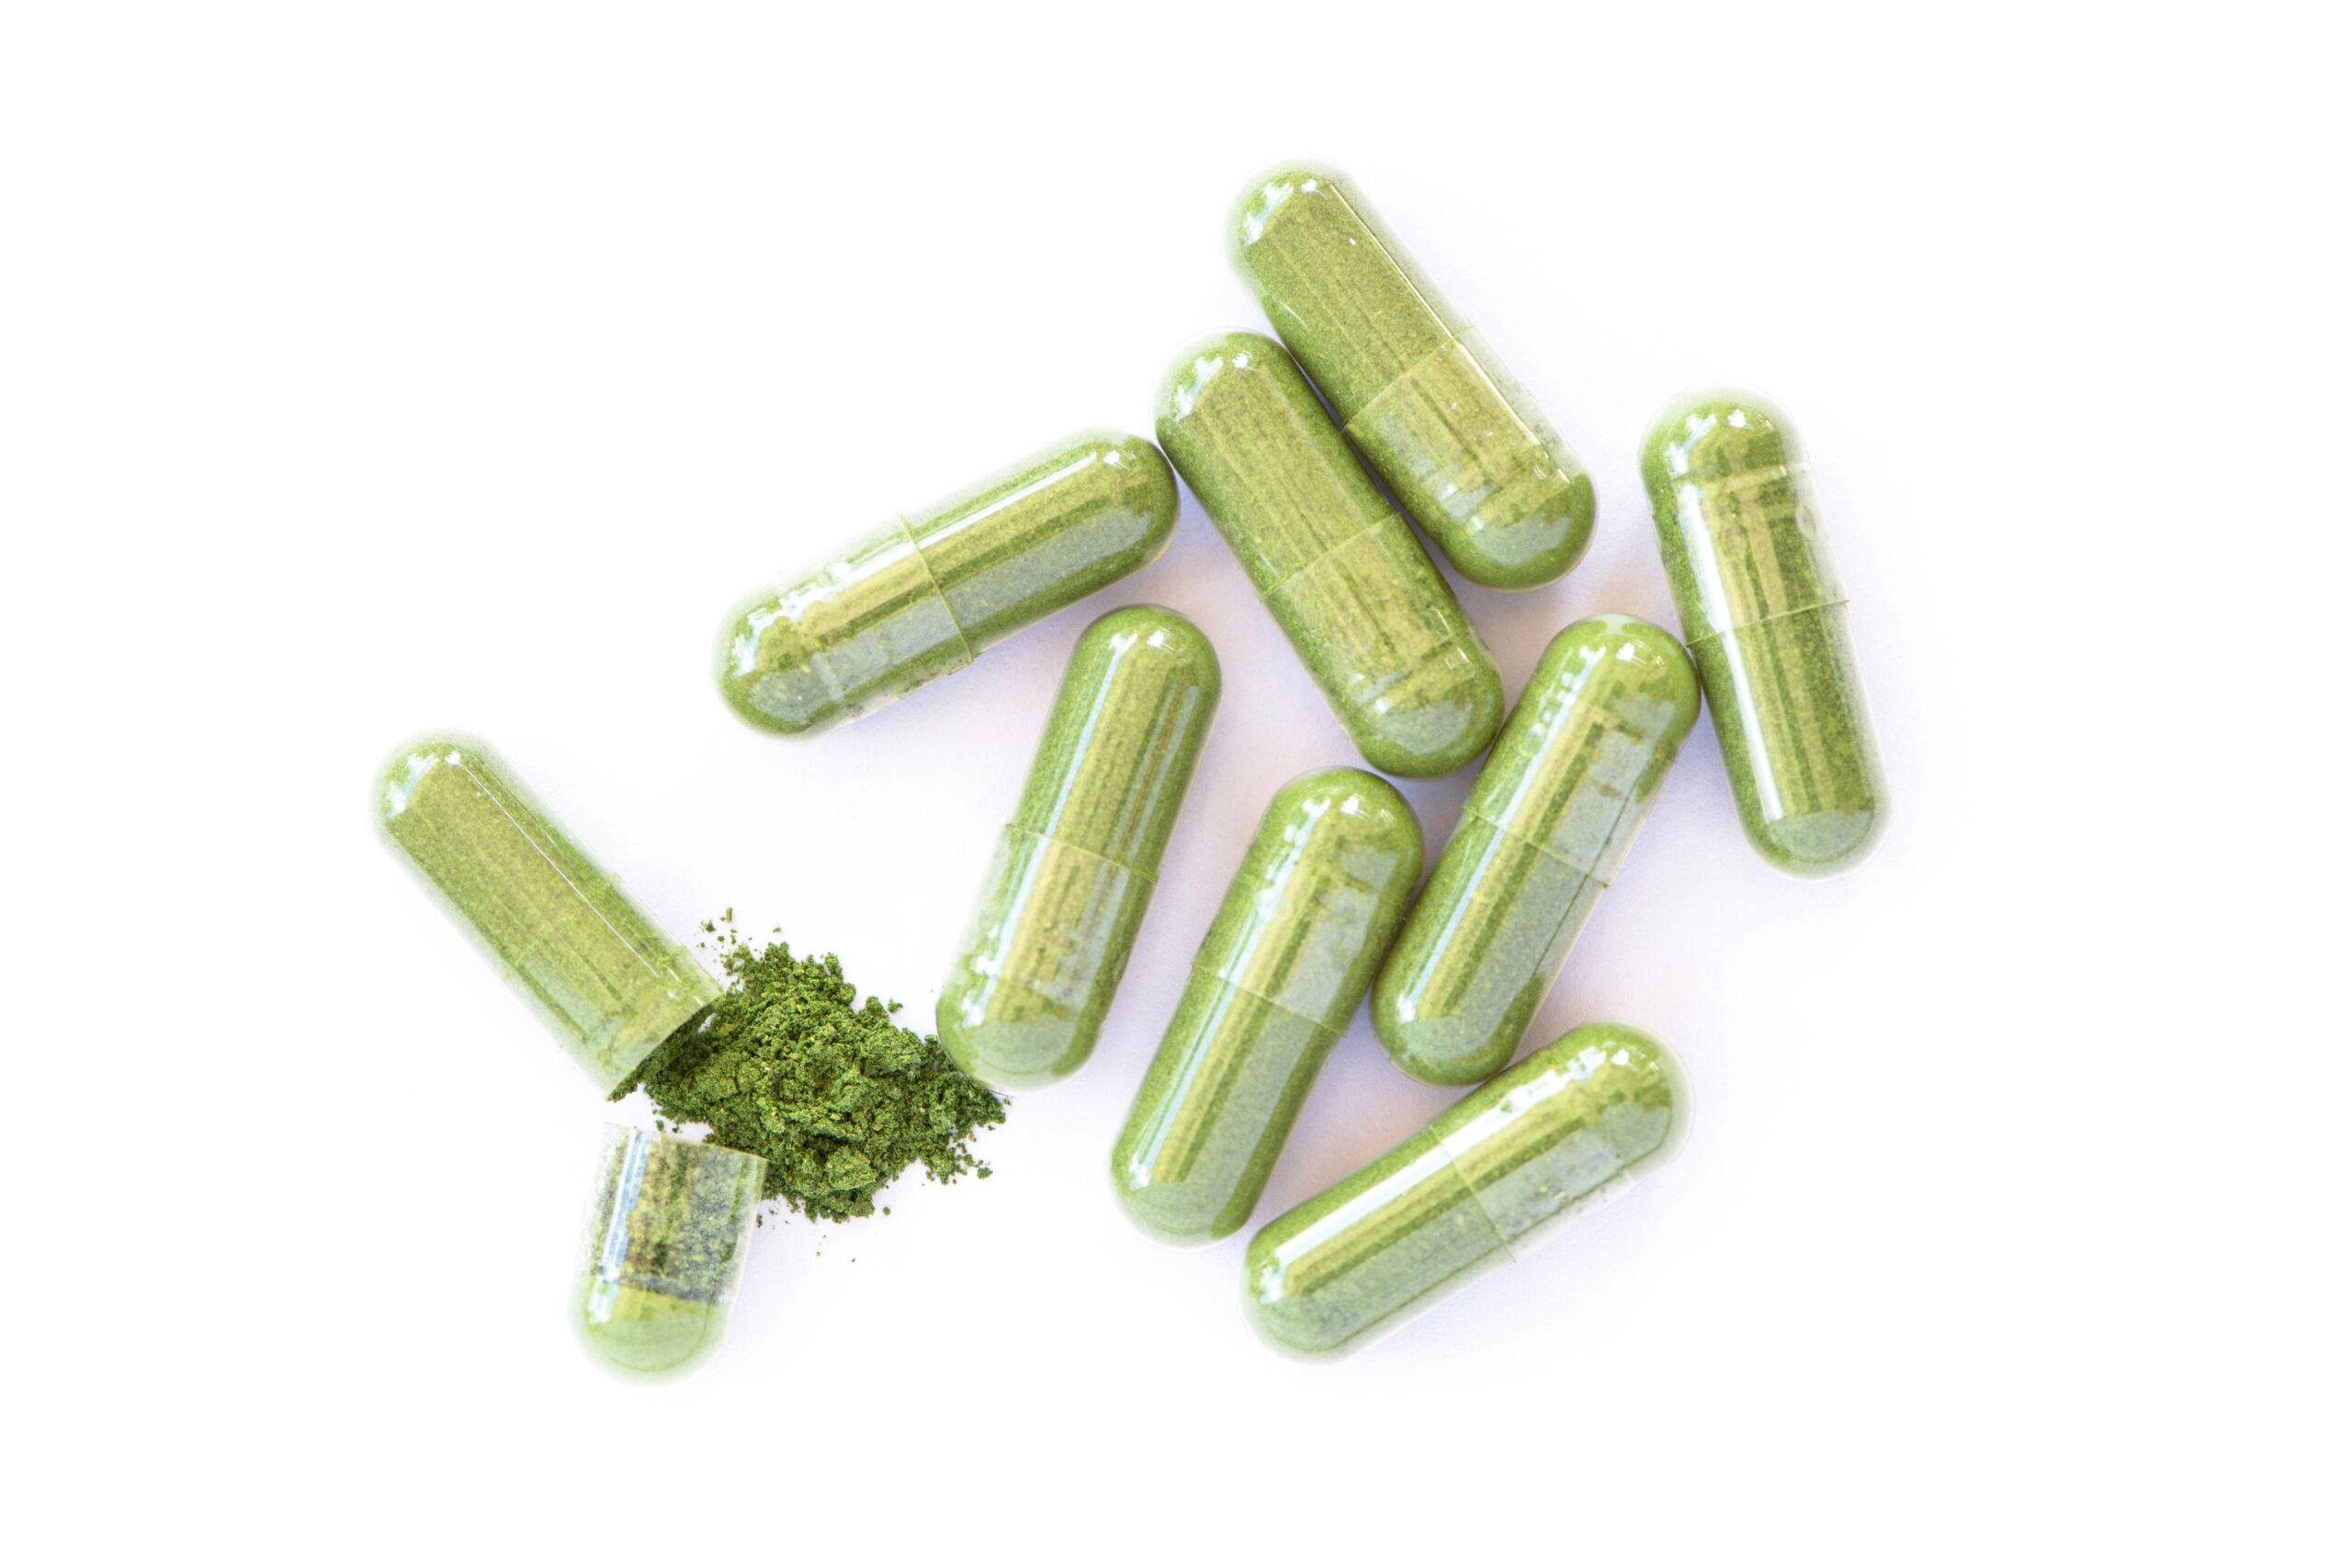 Green herbal powder capsule